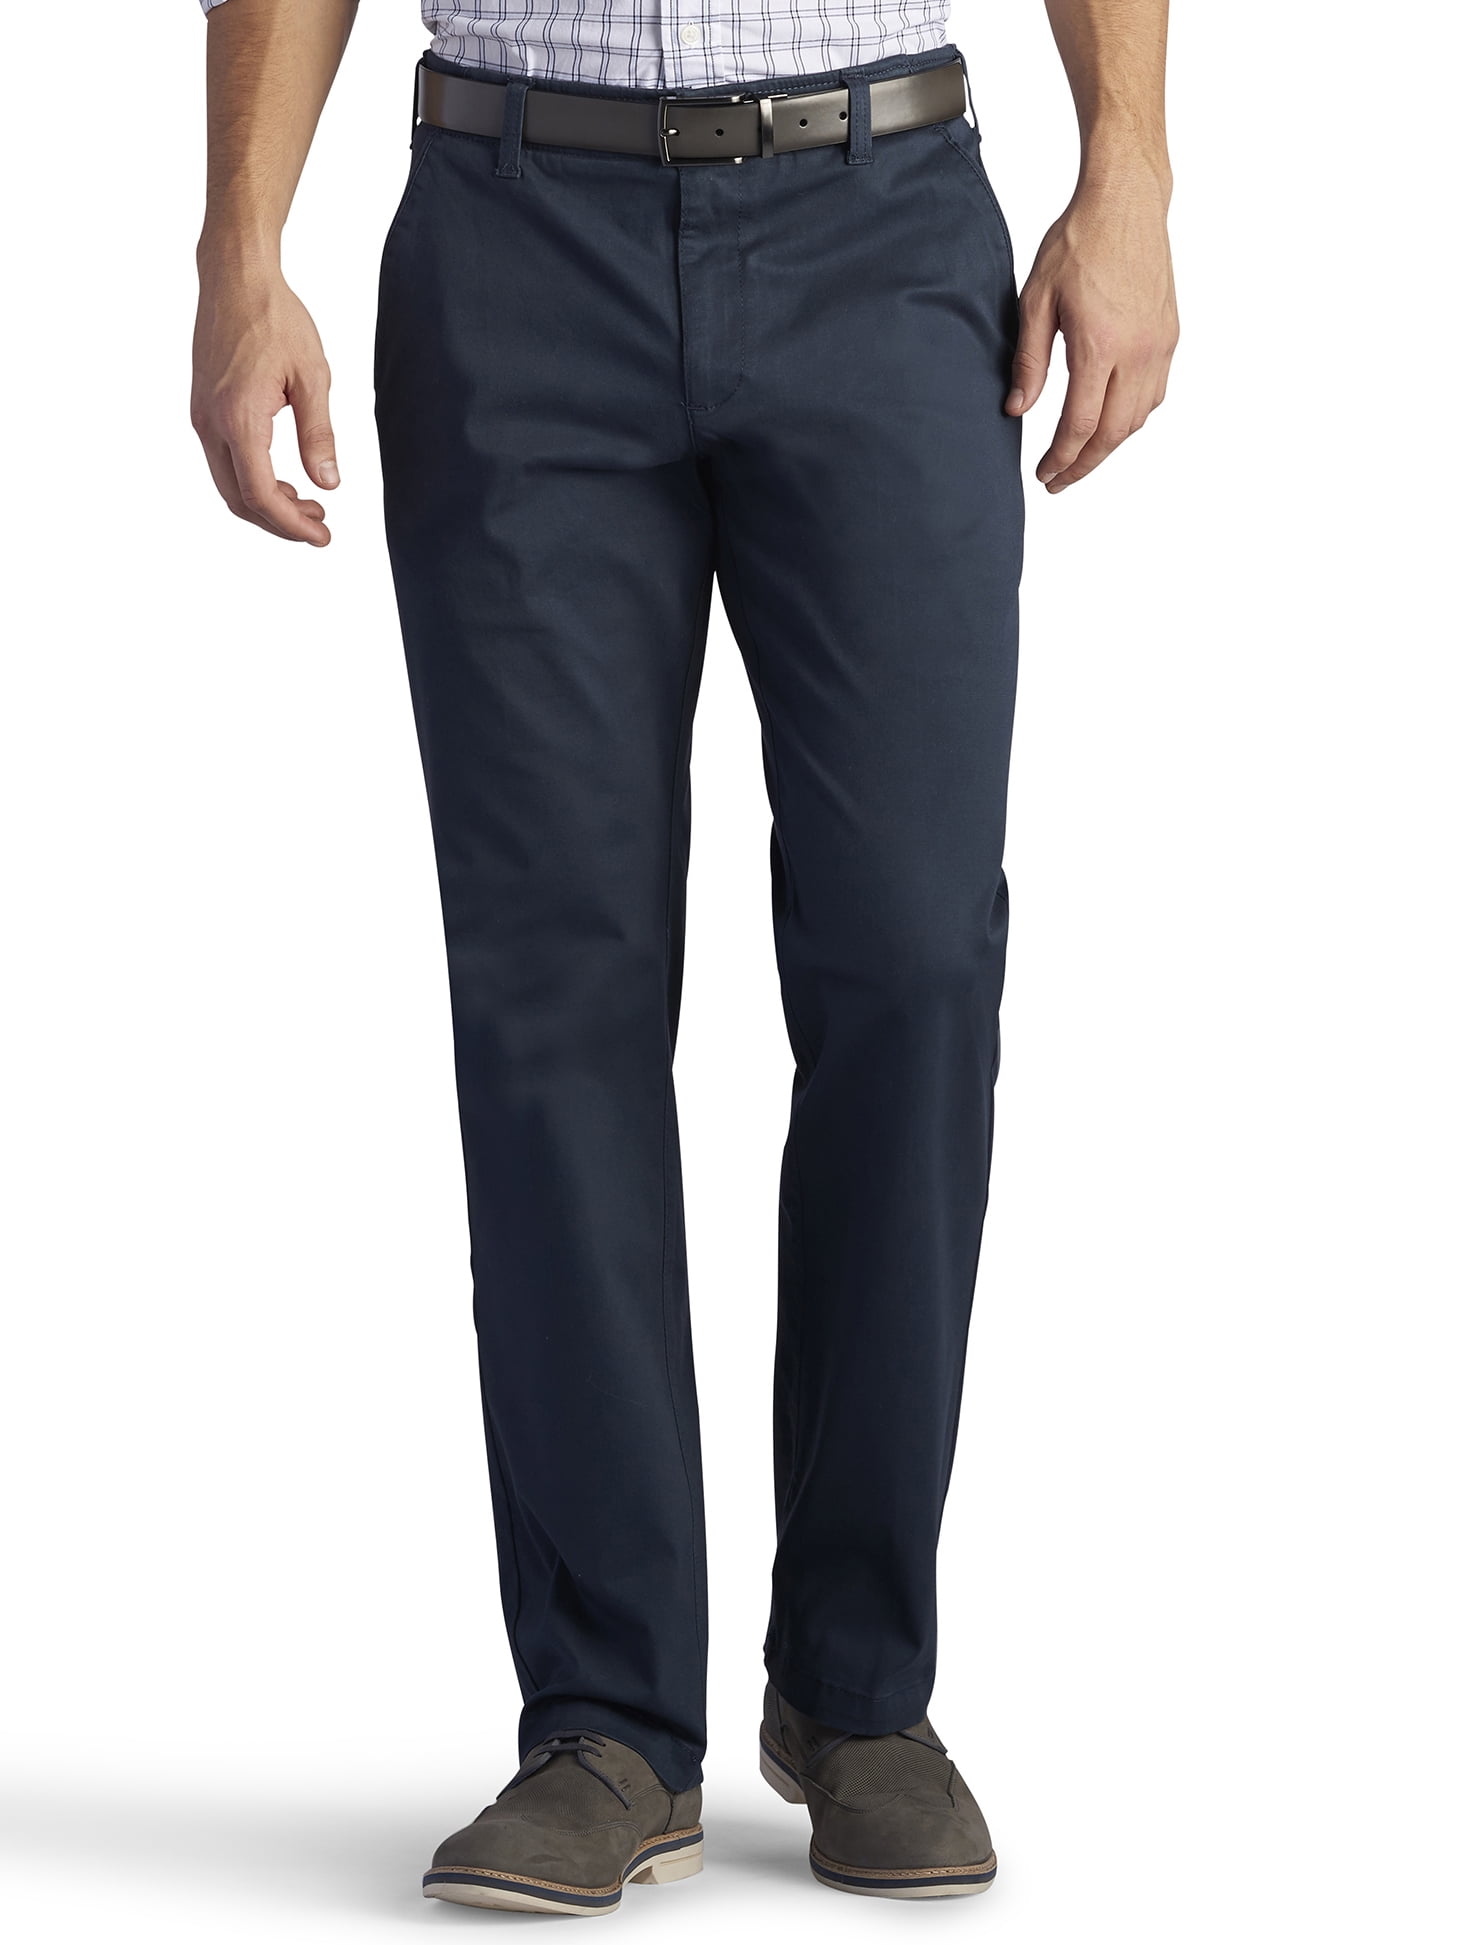 Lee Men's Big & Tall Extreme Comfort Khaki Pant - Navy, Navy, 44X30 ...